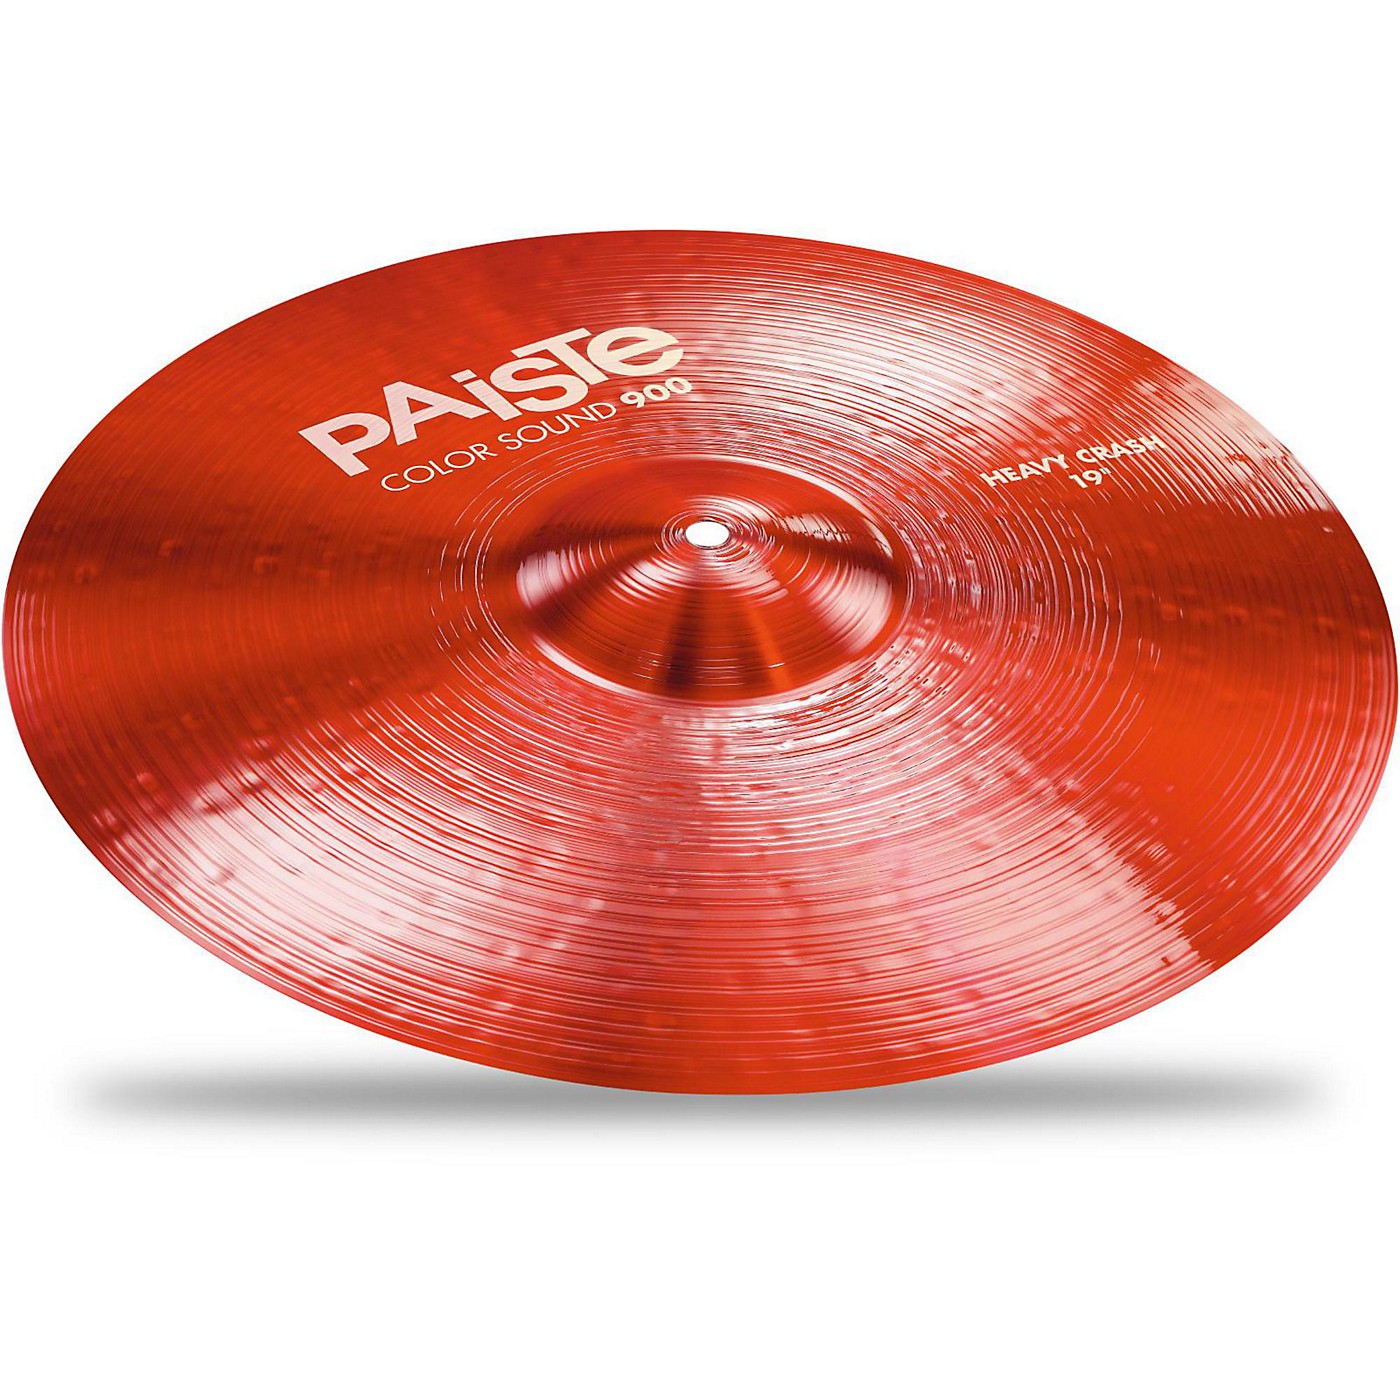 Paiste Colorsound 900 Heavy Crash Cymbal Red thumbnail